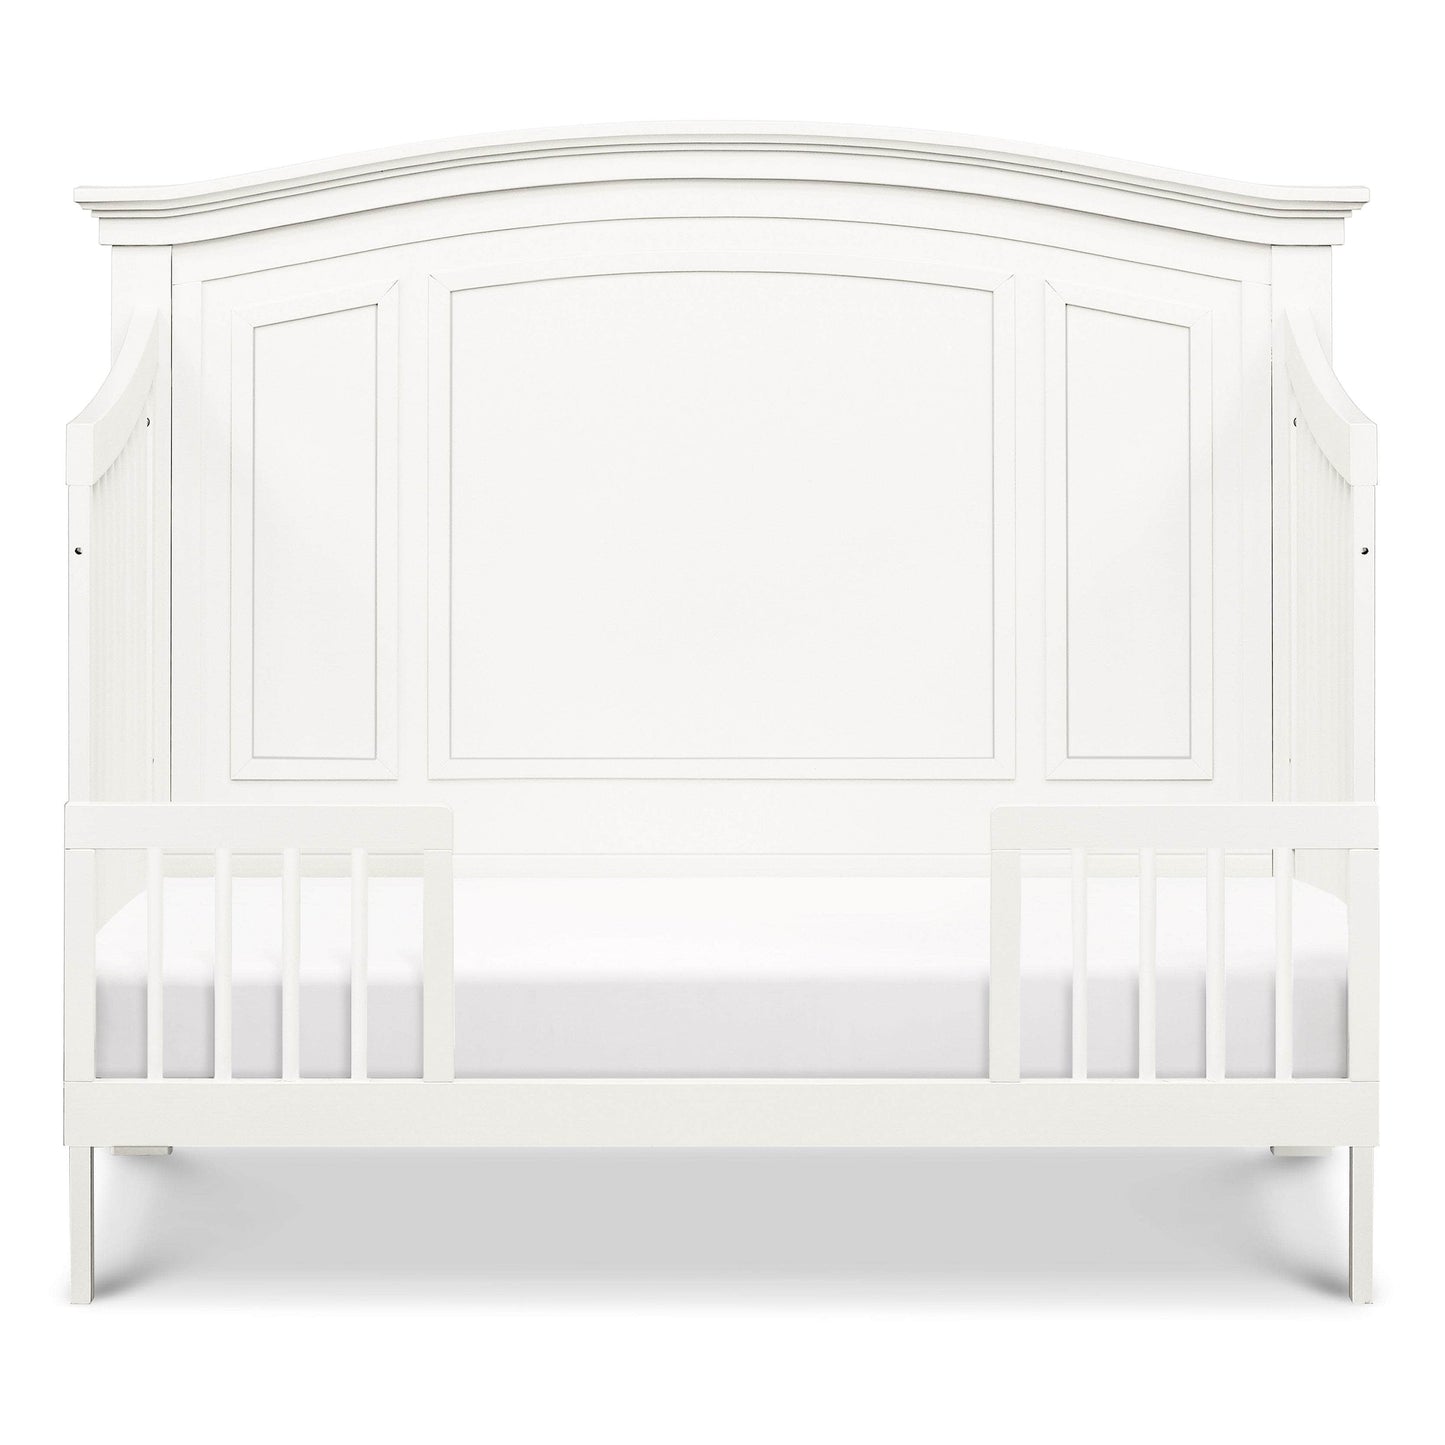 M18301RW,Durham 4-in-1 Convertible Crib in Warm White